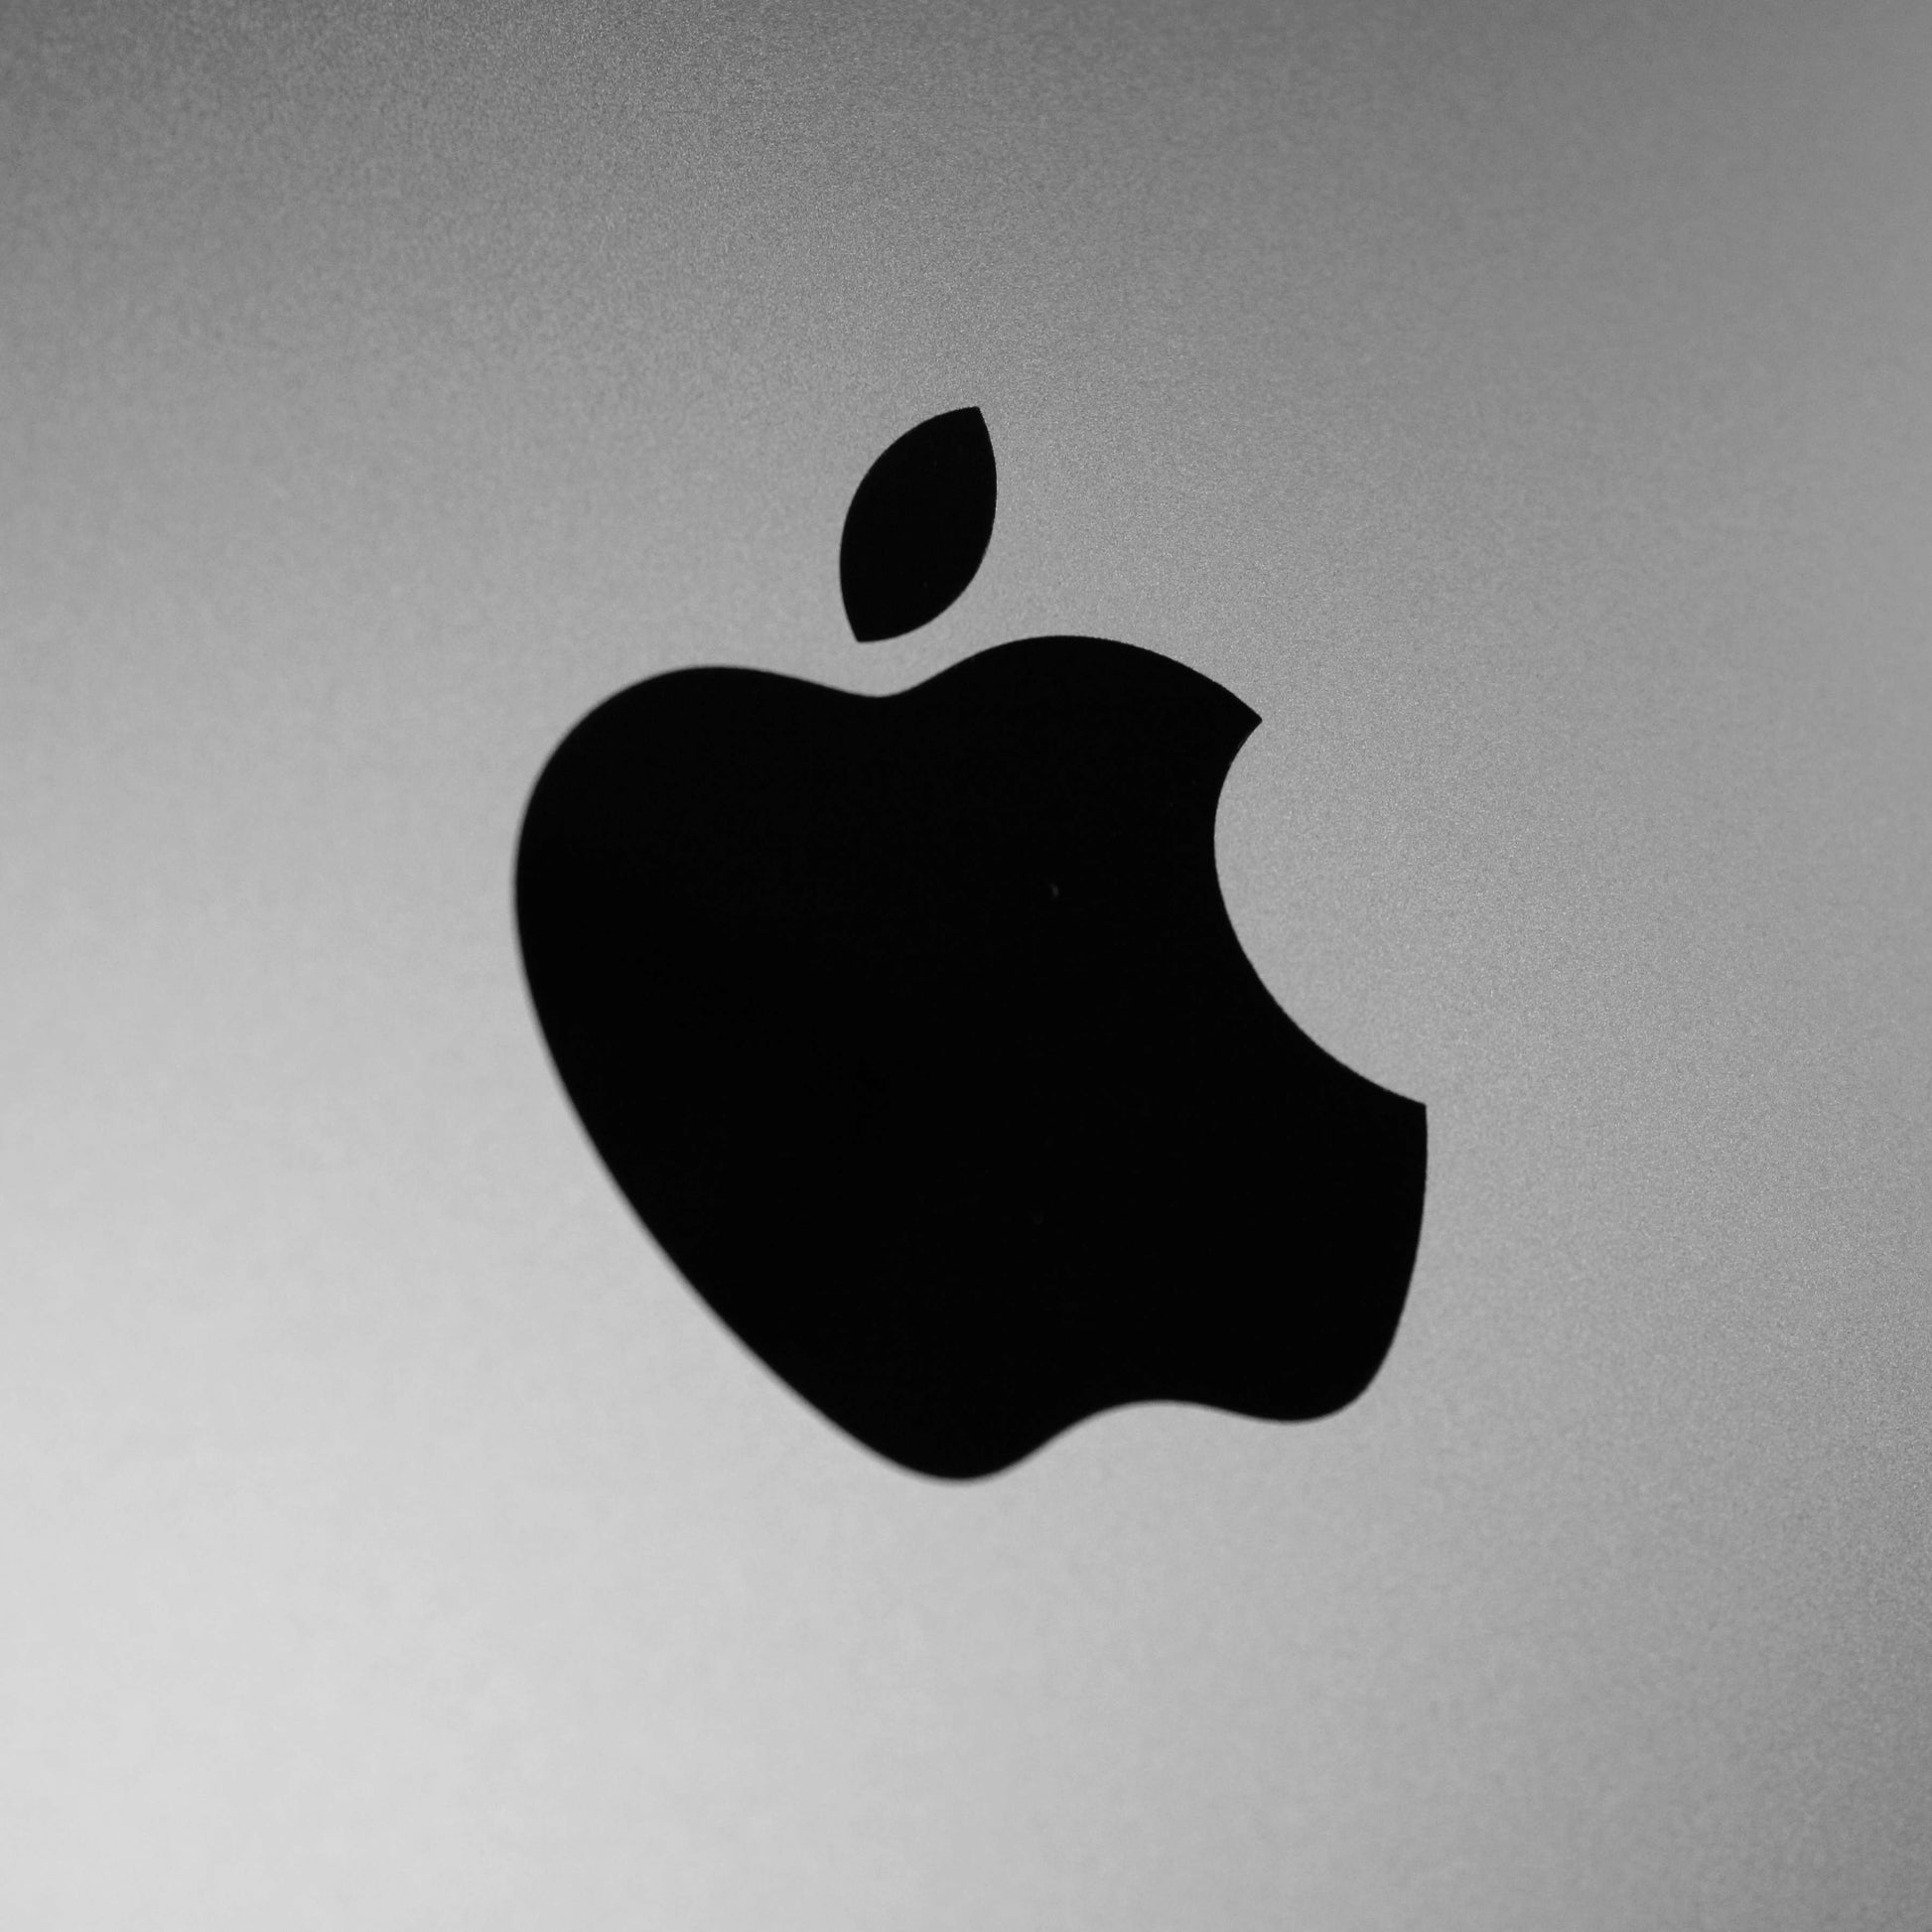 Apple Mac Mini 3.0GHz i5 6-Core (Late 2018) Space Grey